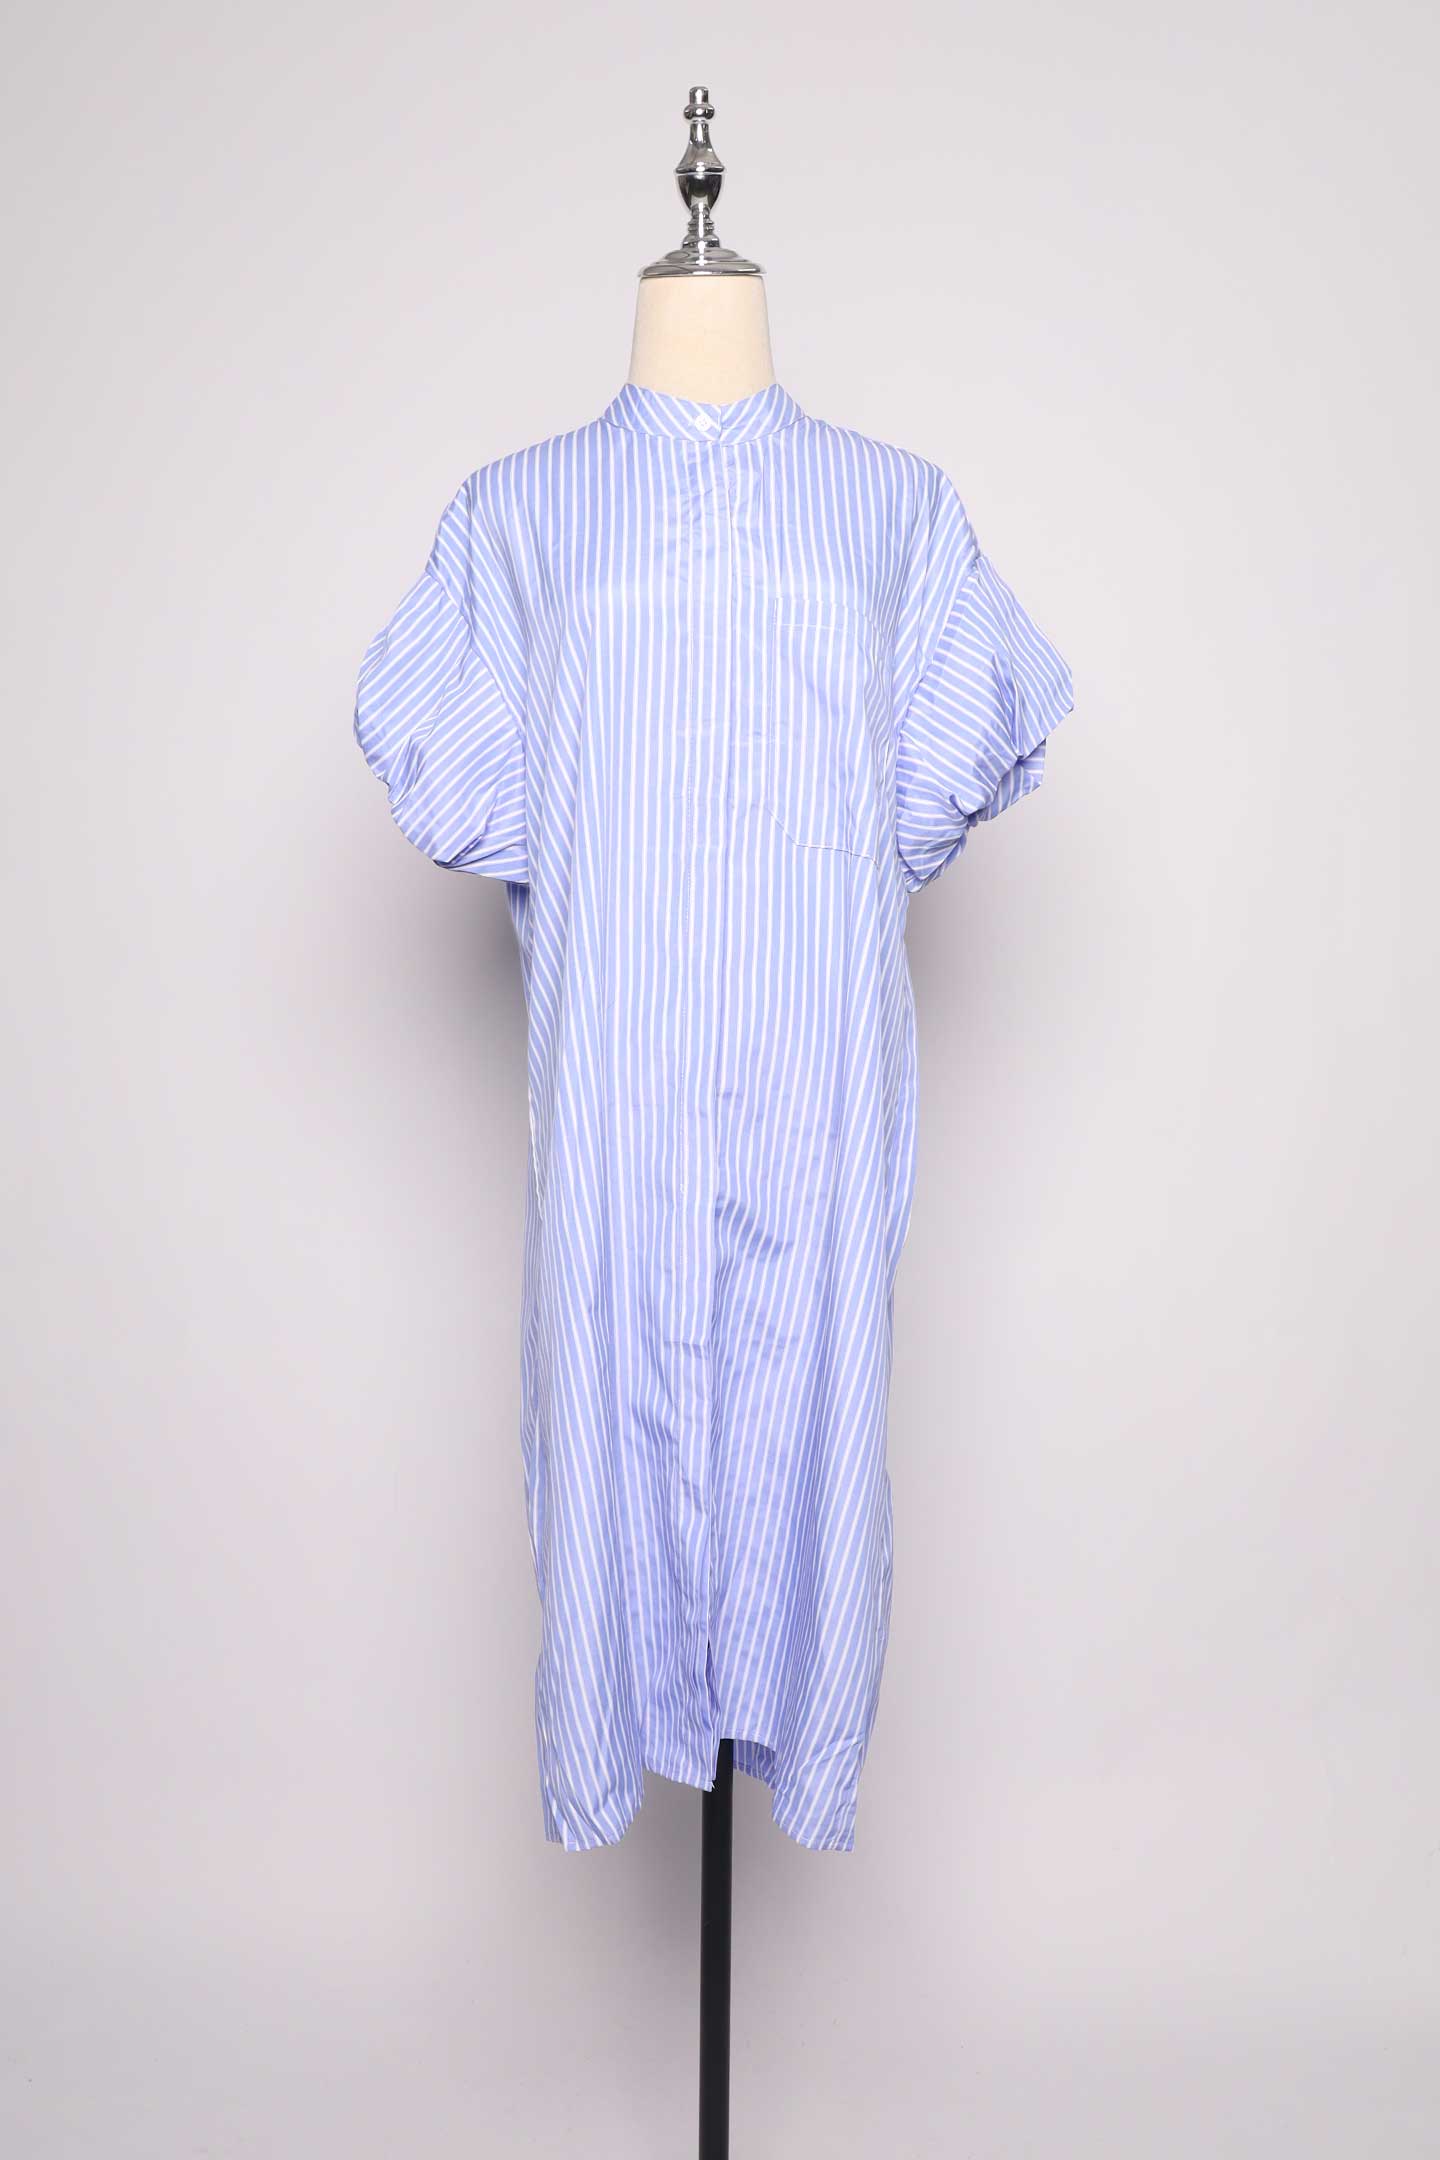 PO - Karter Dress in Blue Stripes